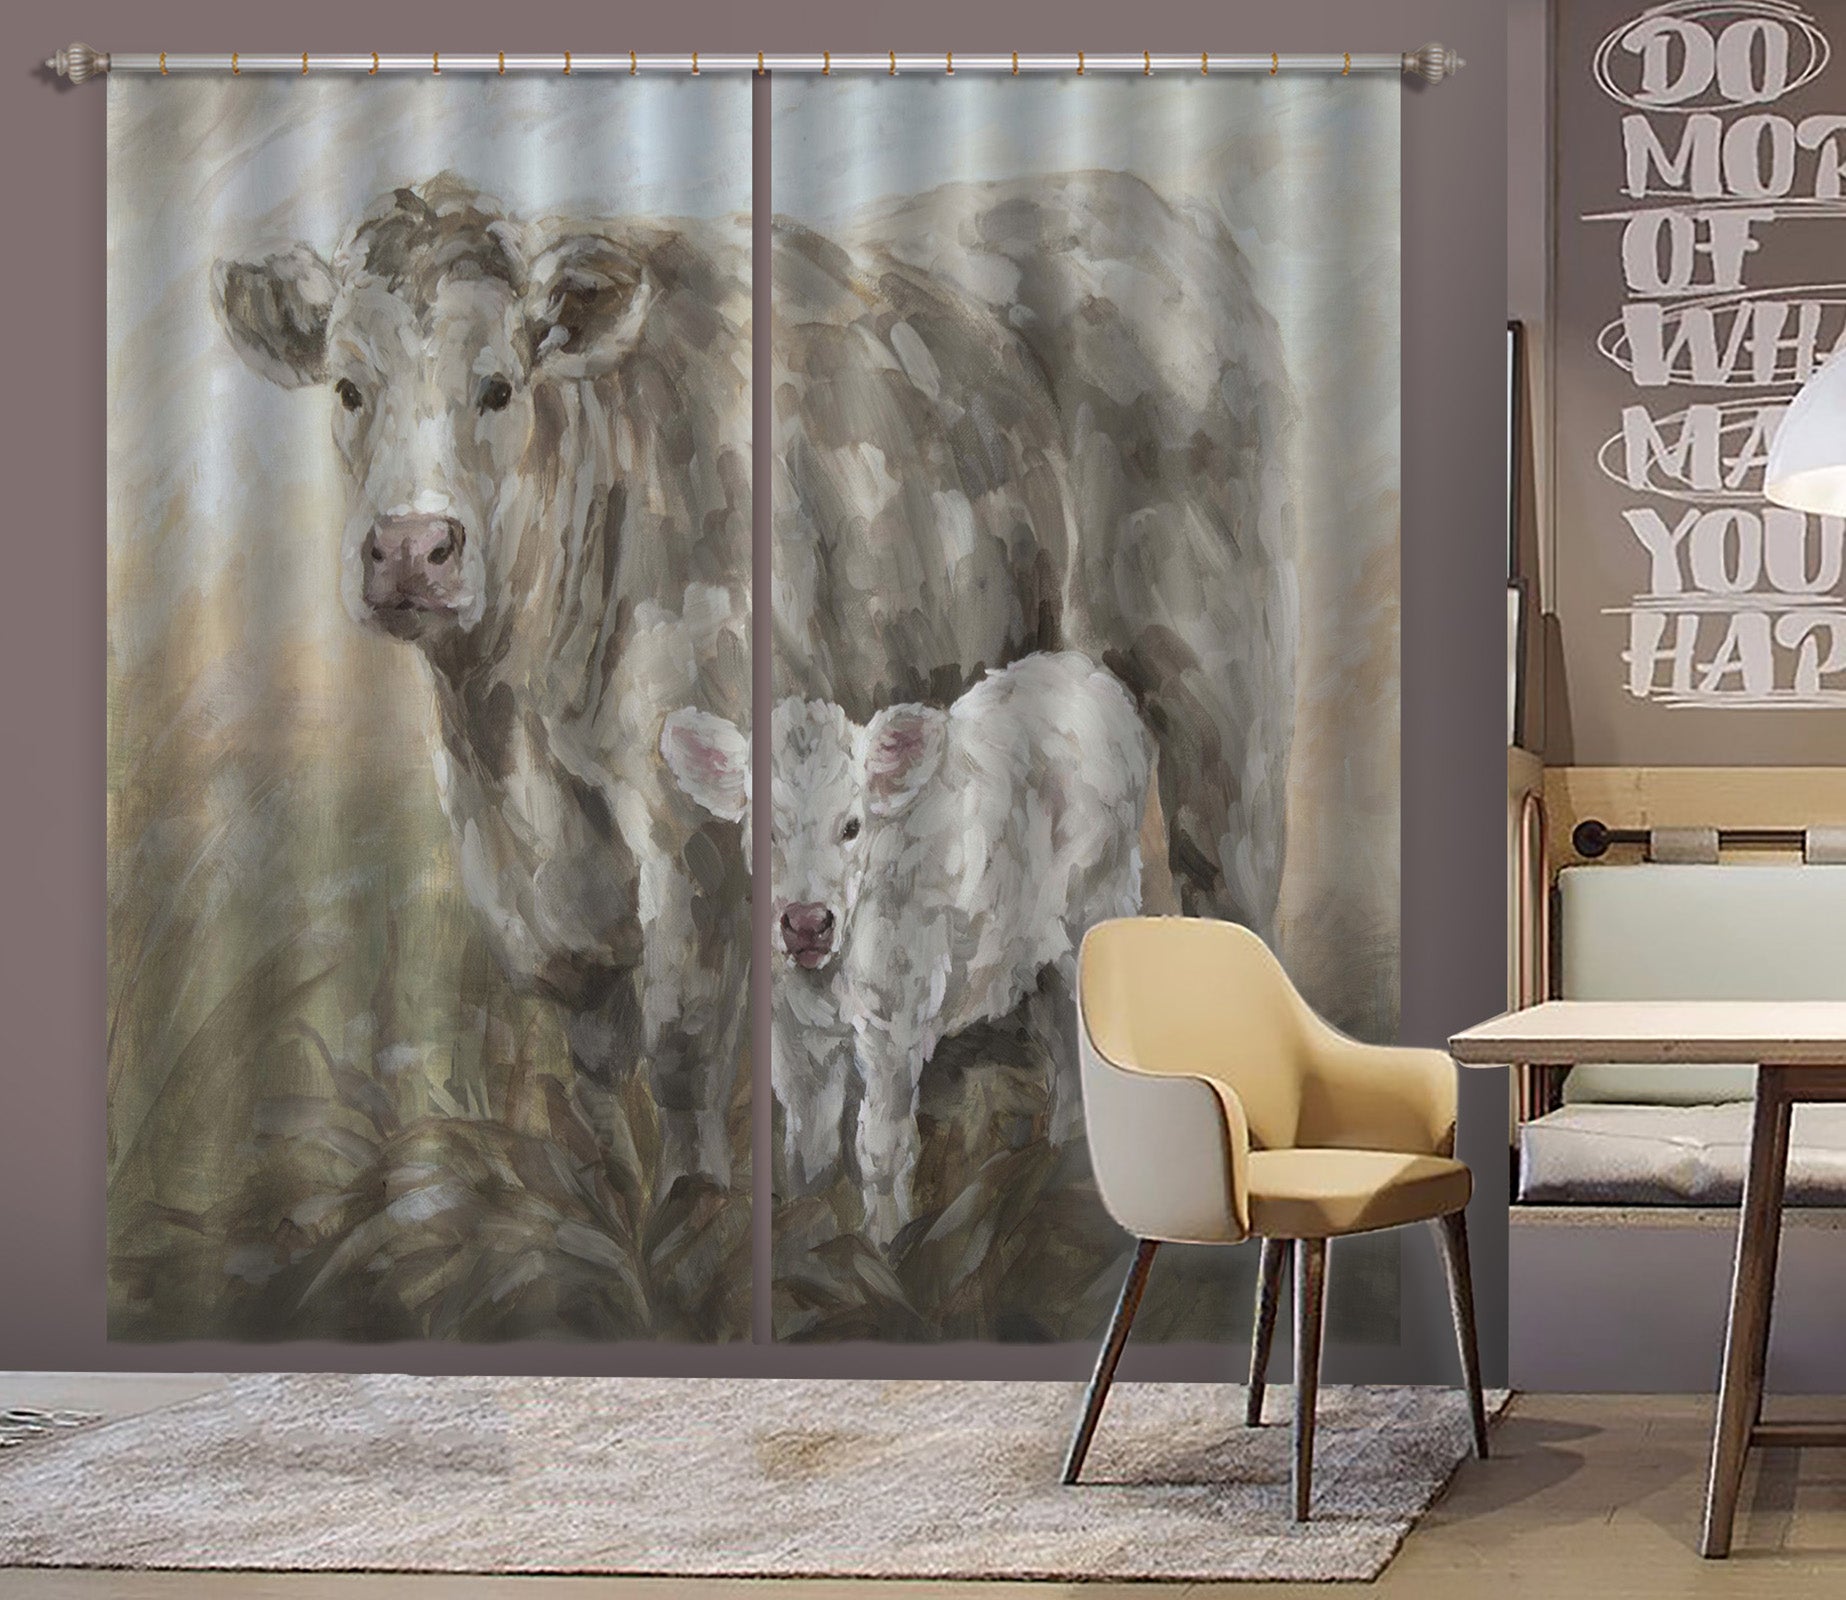 3D Sketch Cow 060 Debi Coules Curtain Curtains Drapes